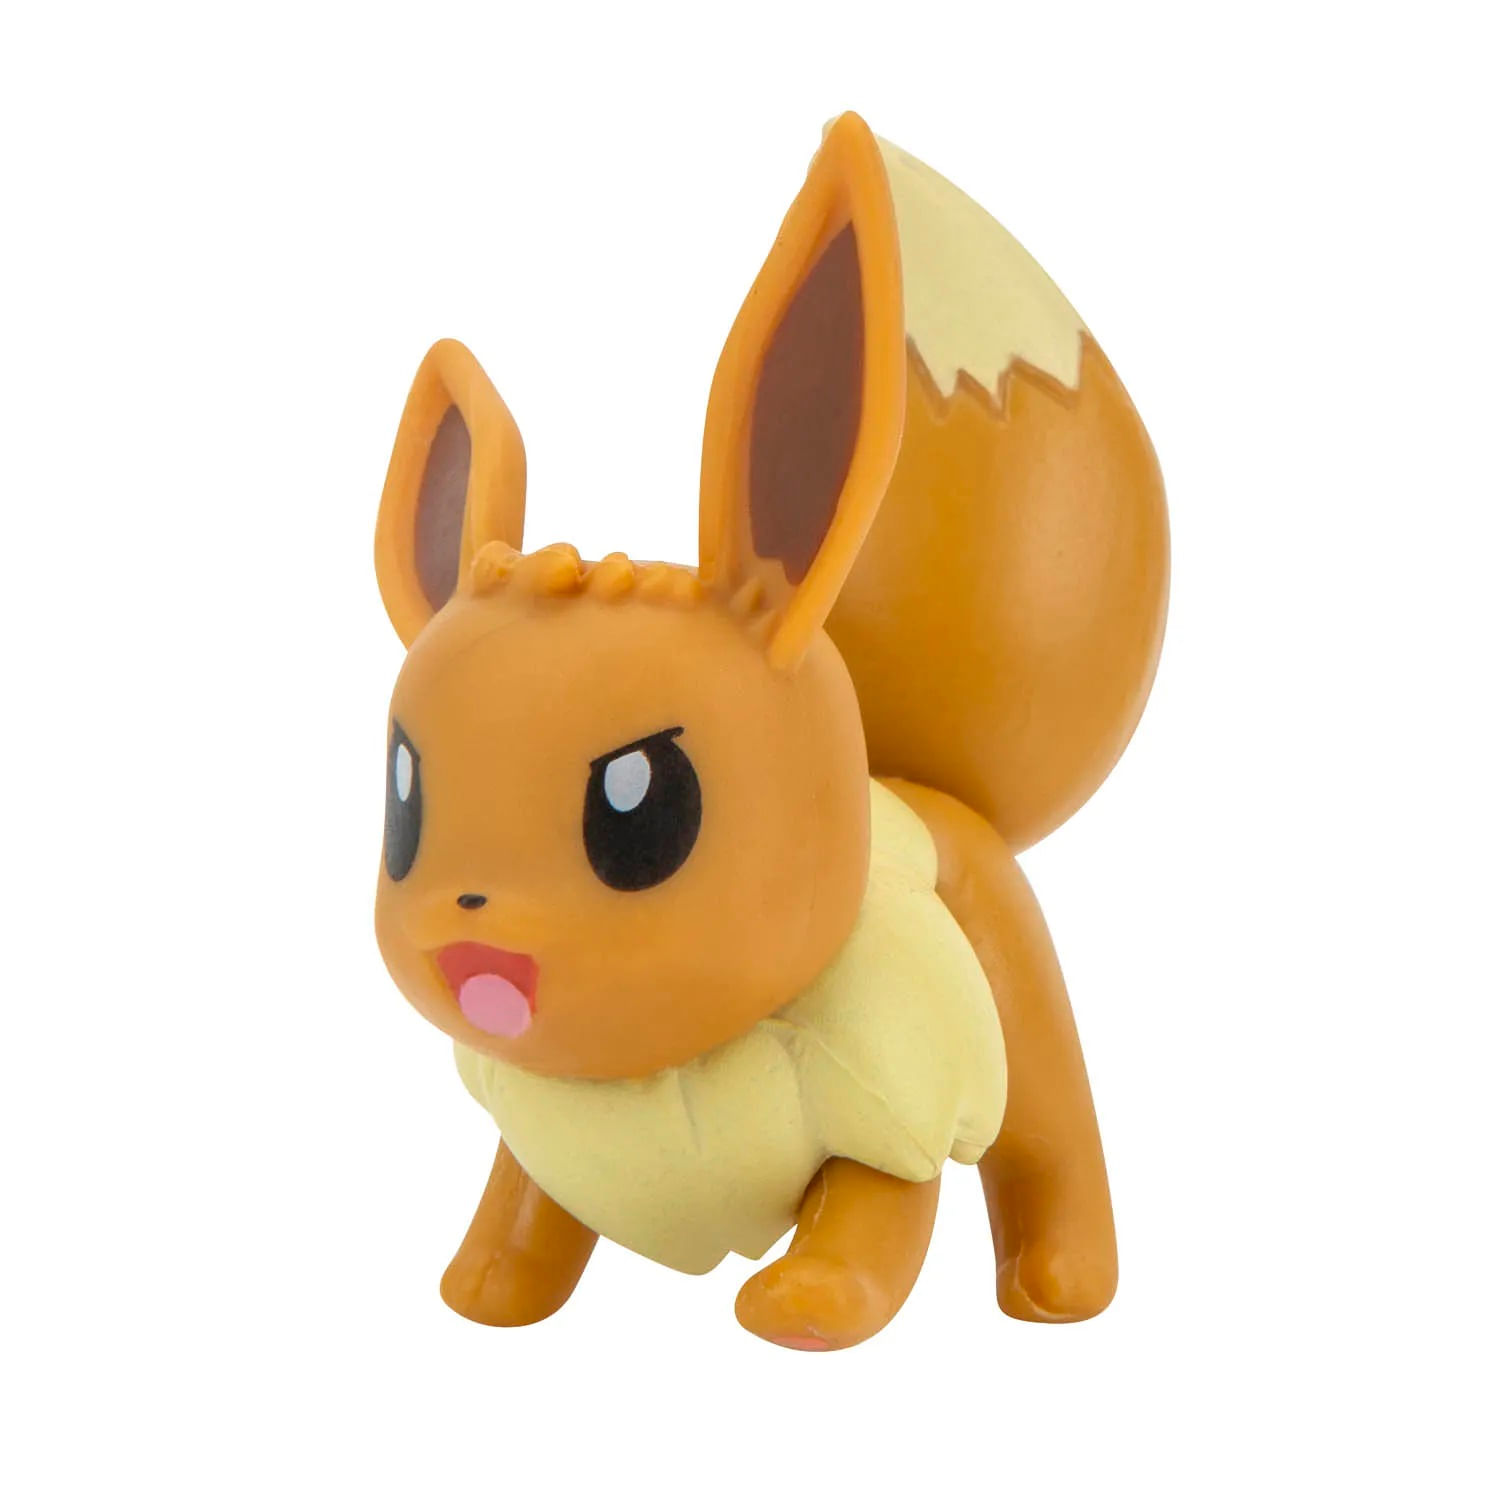 Figura Subaquatico Com Popplio Horsea, Pokemon - Sunny Brinquedos